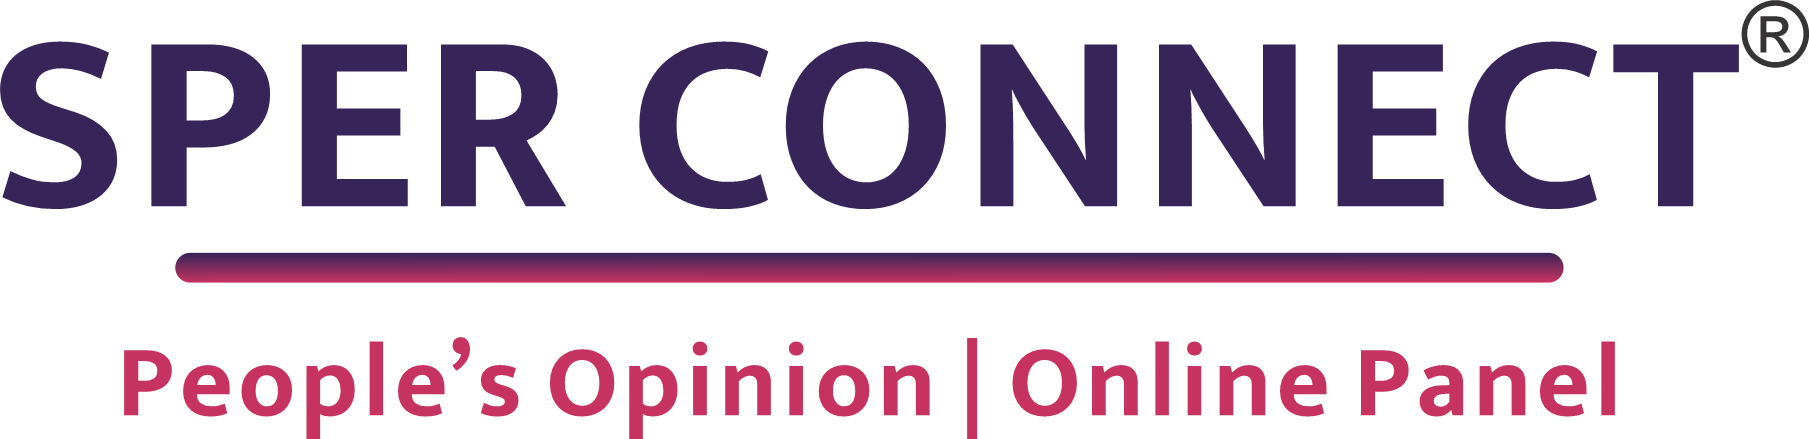 SPER CONNECT logo